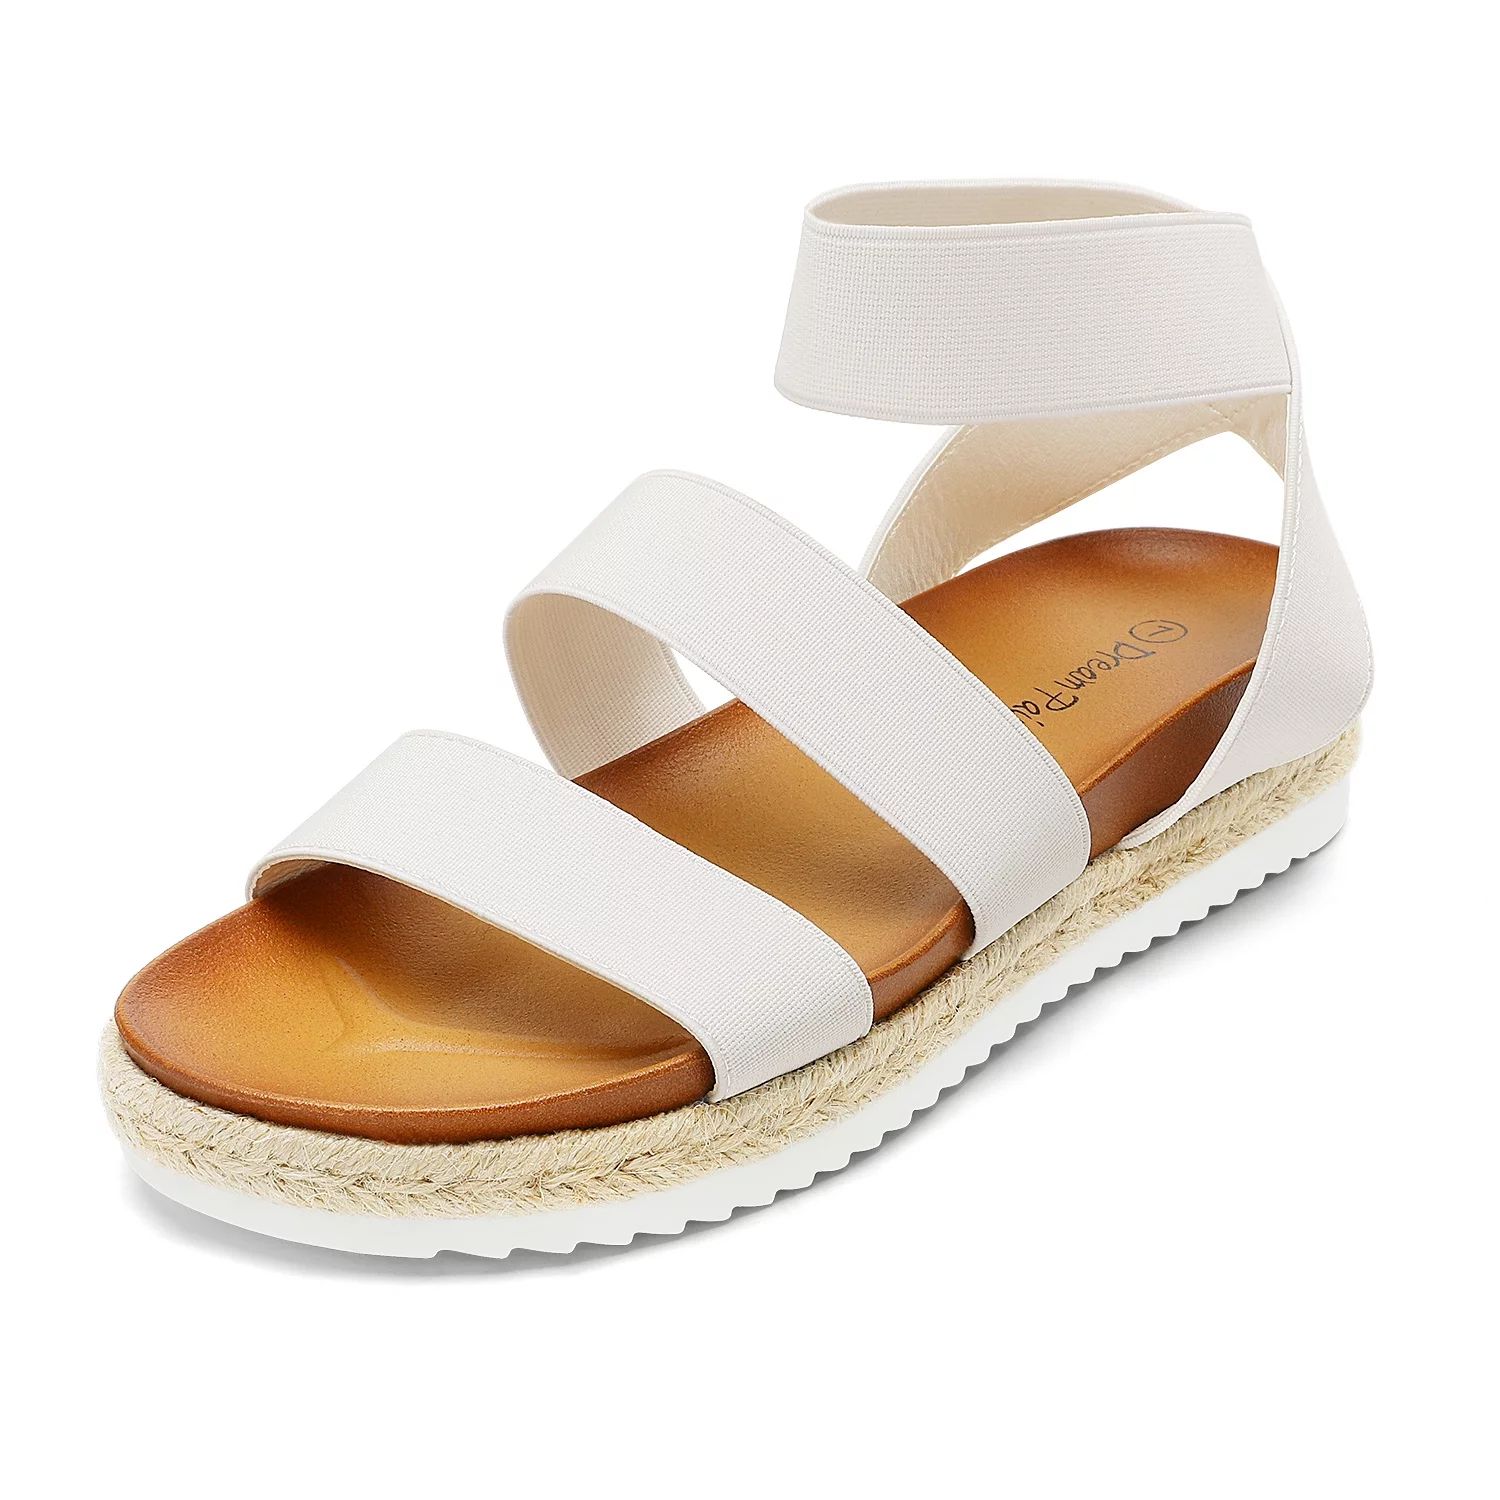 Dream Pairs Women's Jimmie White Platform Wedge Sandals Size 8.5 B(M) US | Walmart (US)